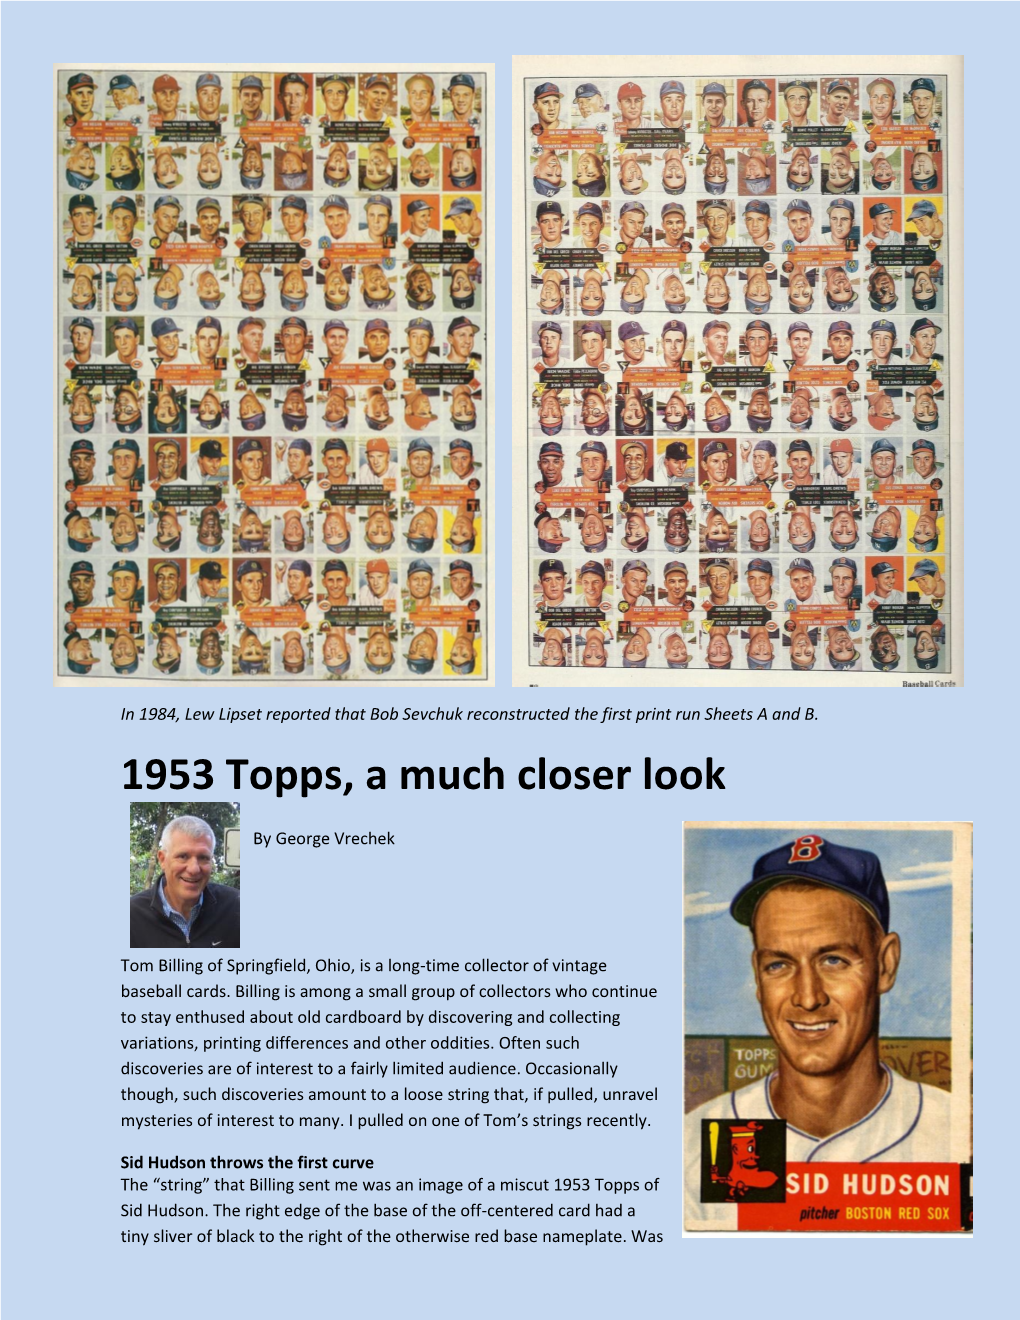 1953 Topps, a Much Closer Look